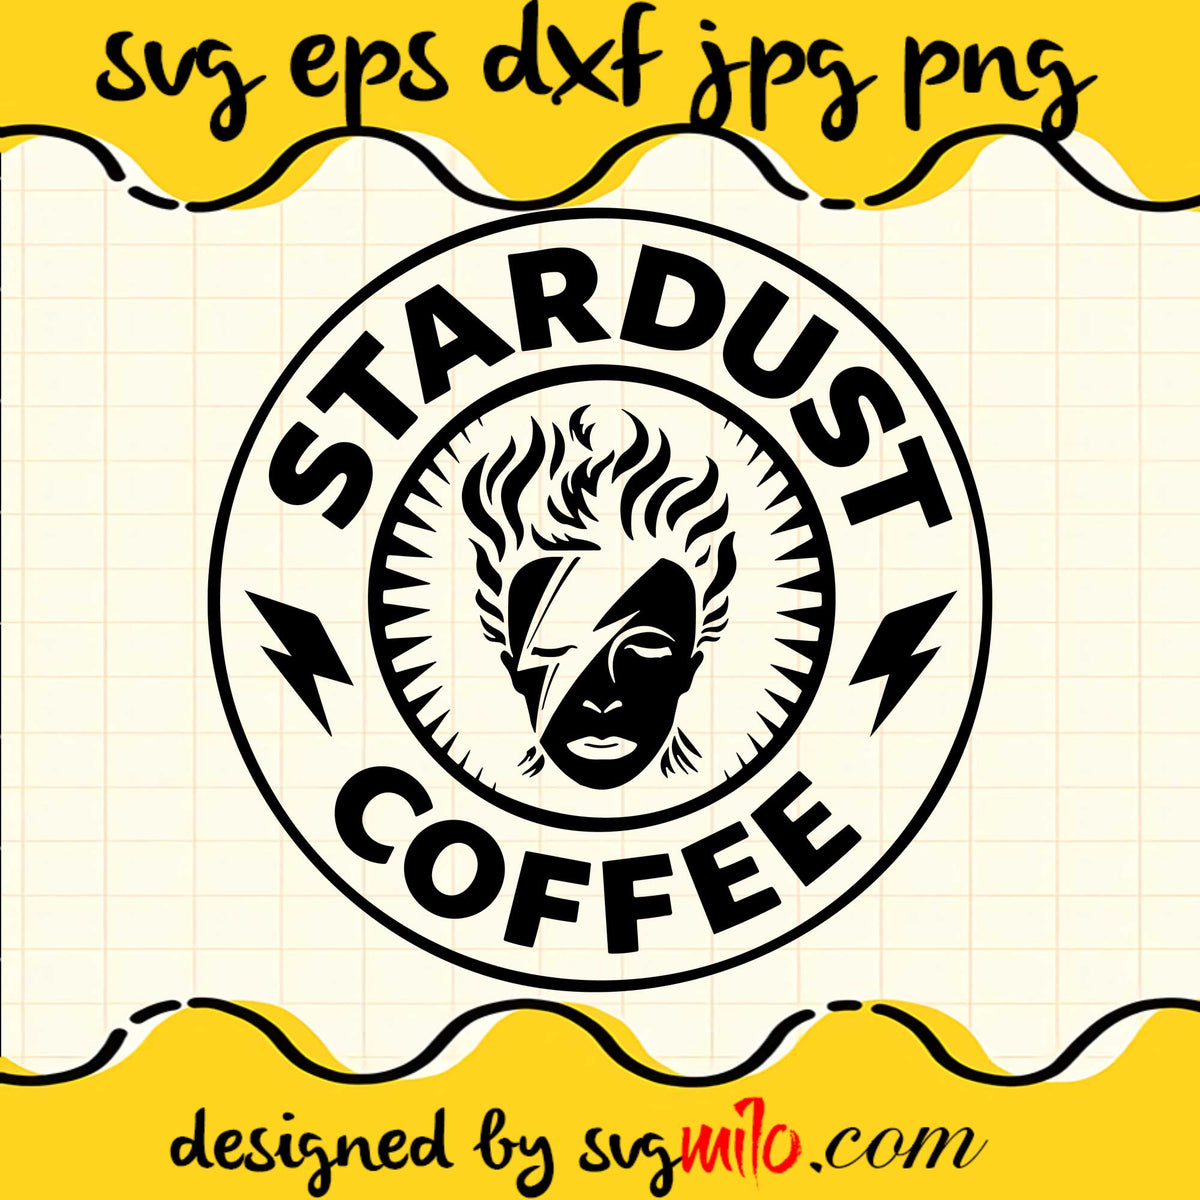 doctor who starbucks - Coffee - Sticker